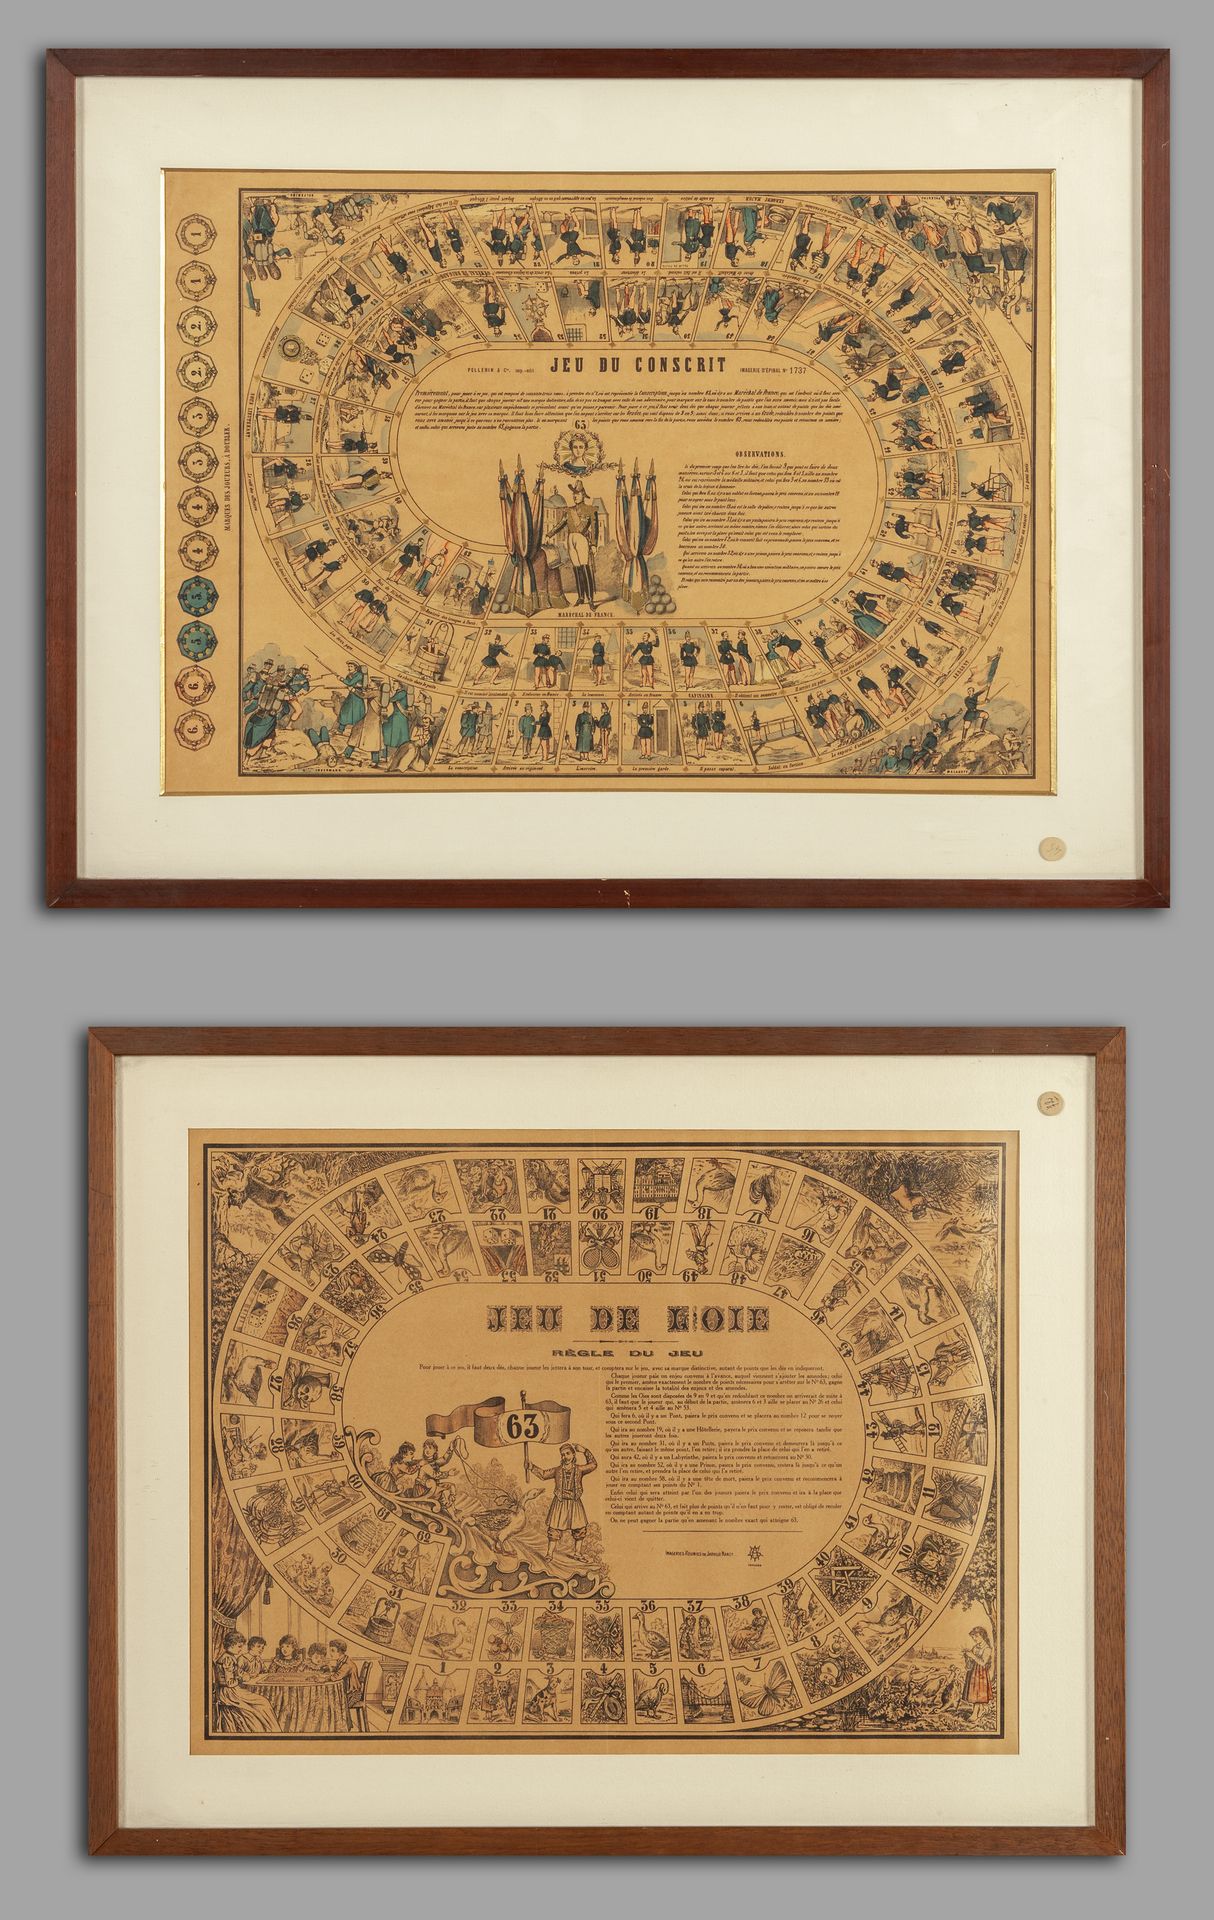 OGGETTISTICA Jeu du conscrit y Game of Goose dos grabados del siglo XIX